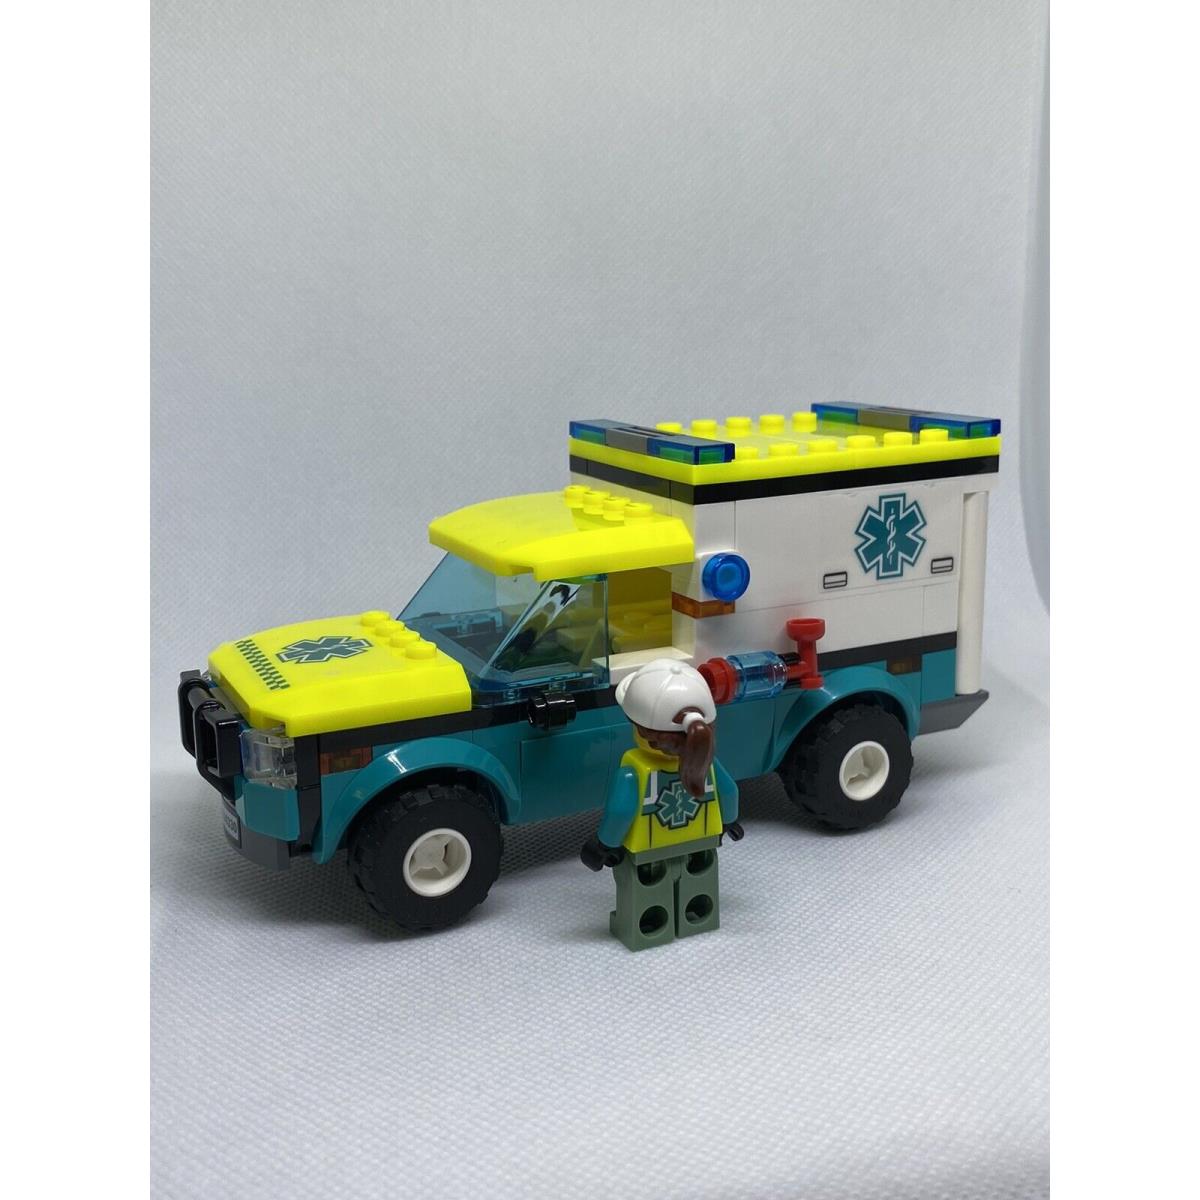 Lego City Hospital Ambulance with Figure From Set 60330